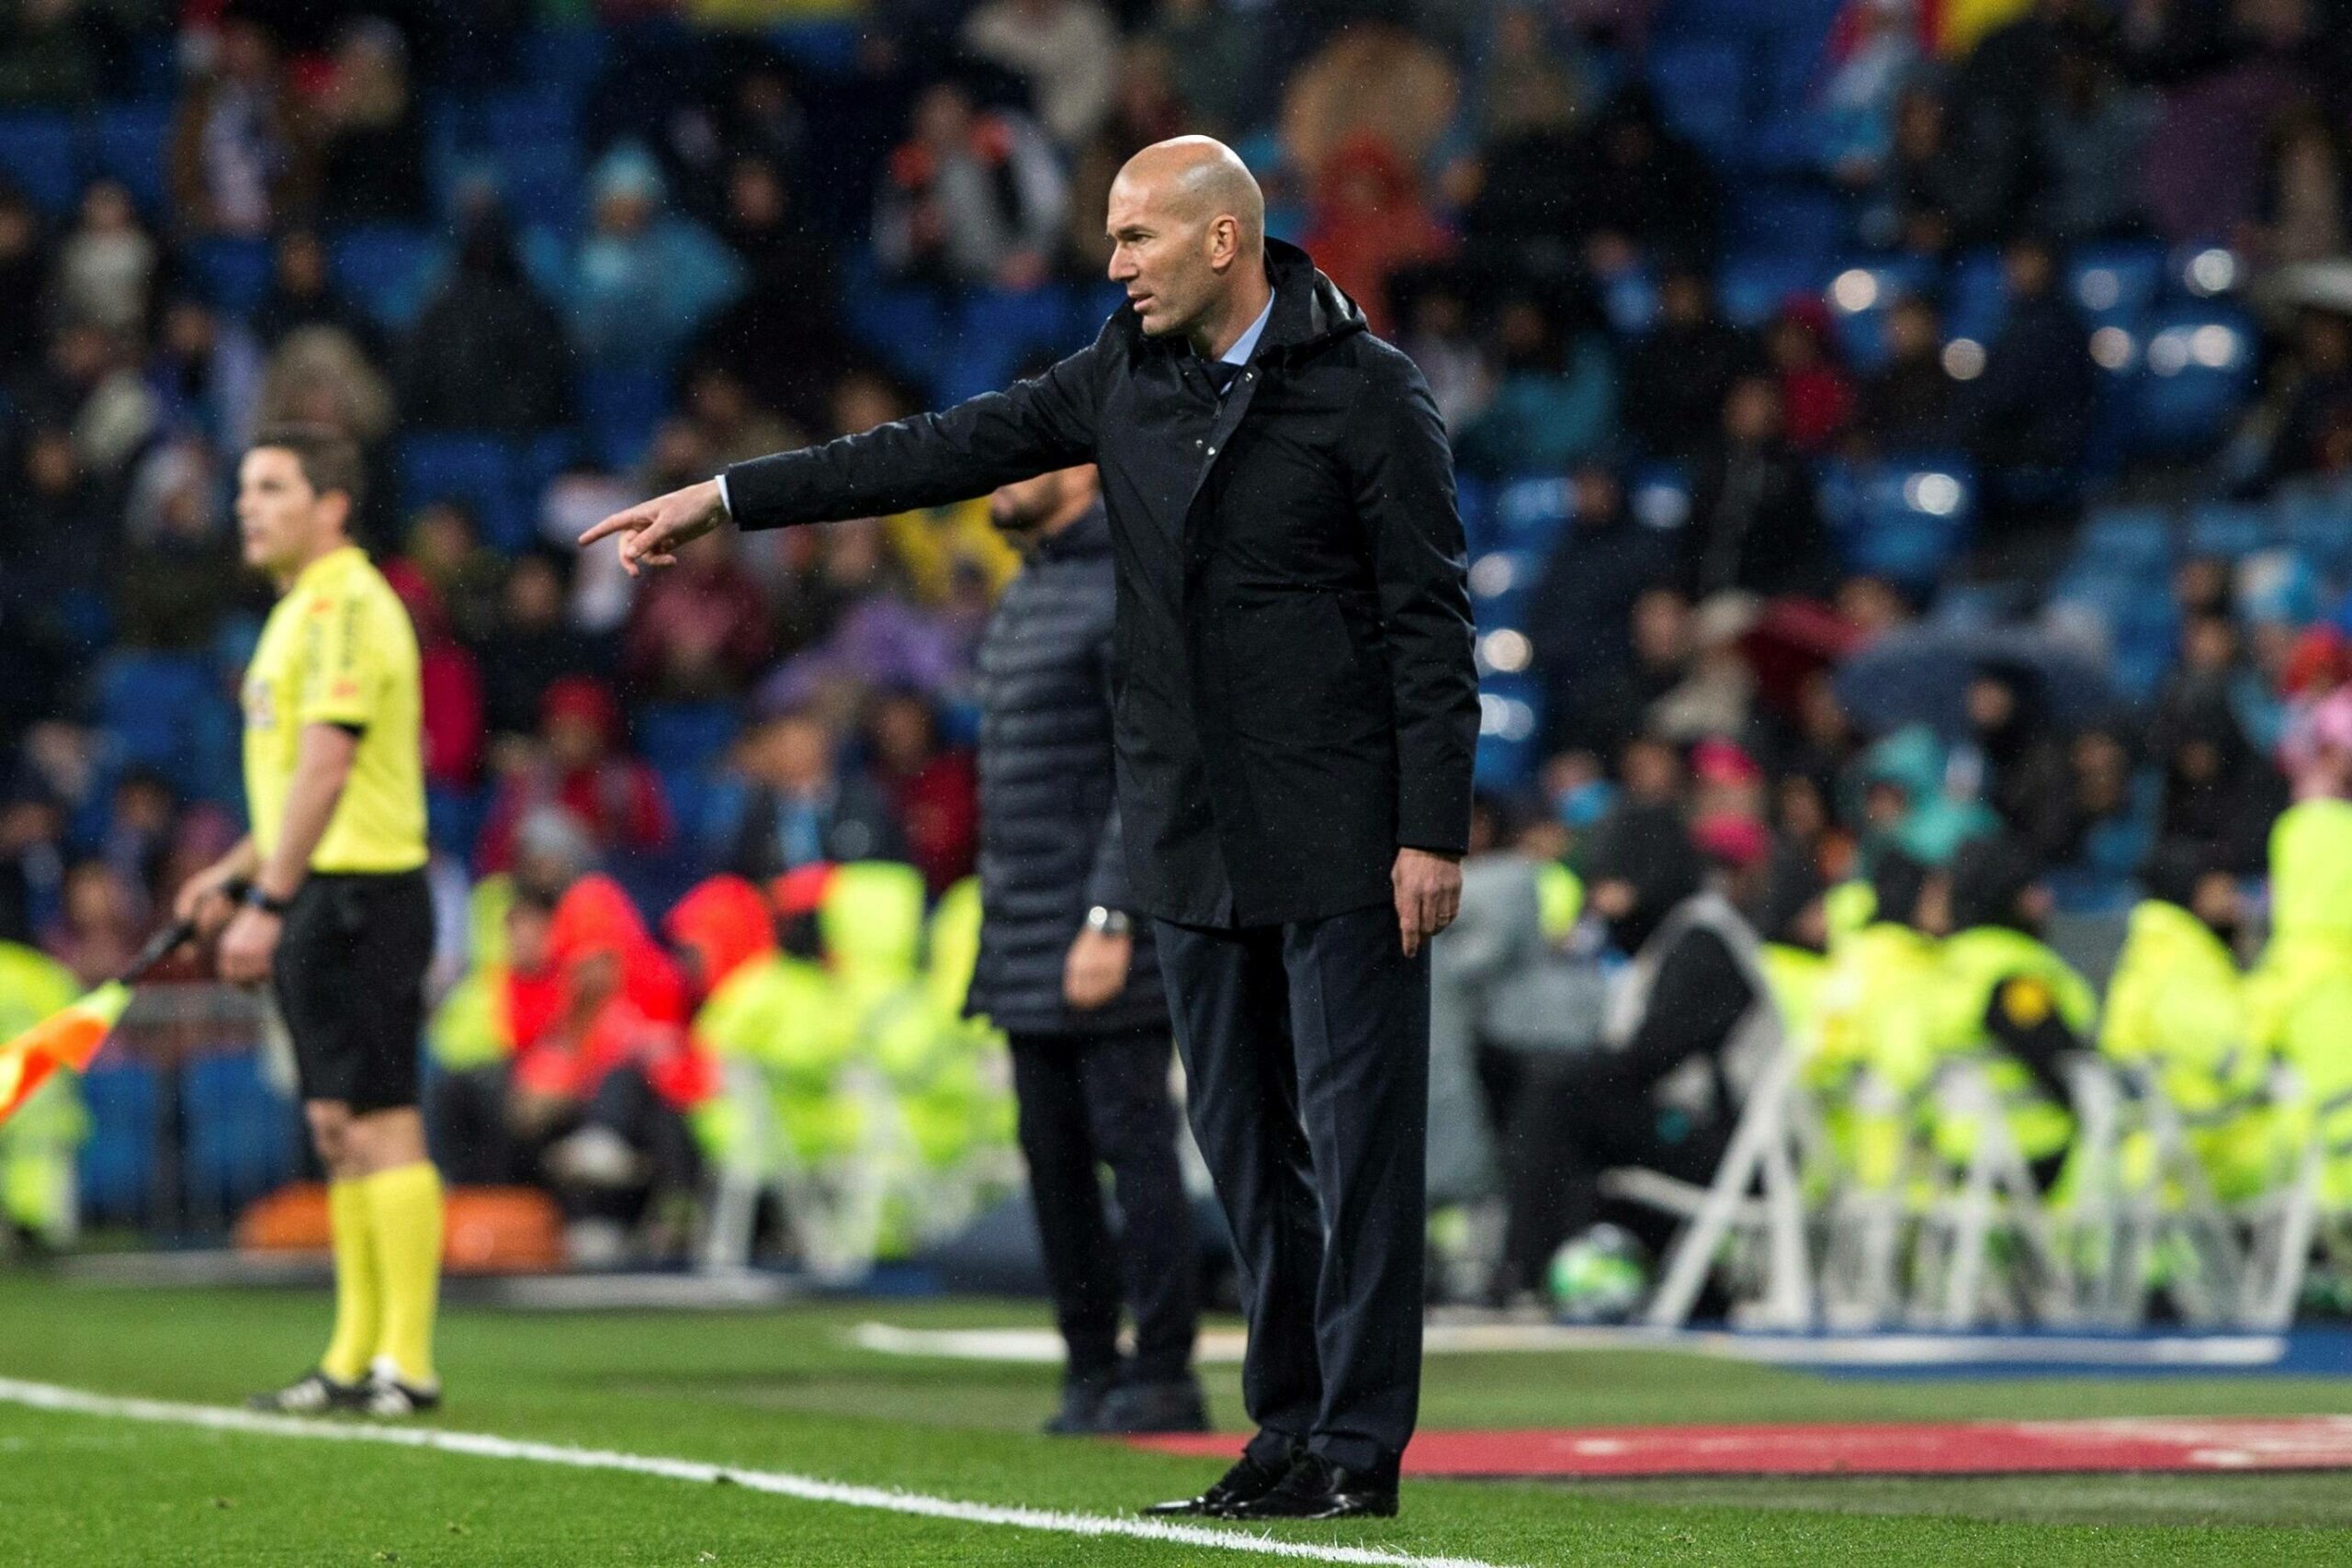 Entscheidung offenbar gefallen: Zidane verlässt Real Madrid!